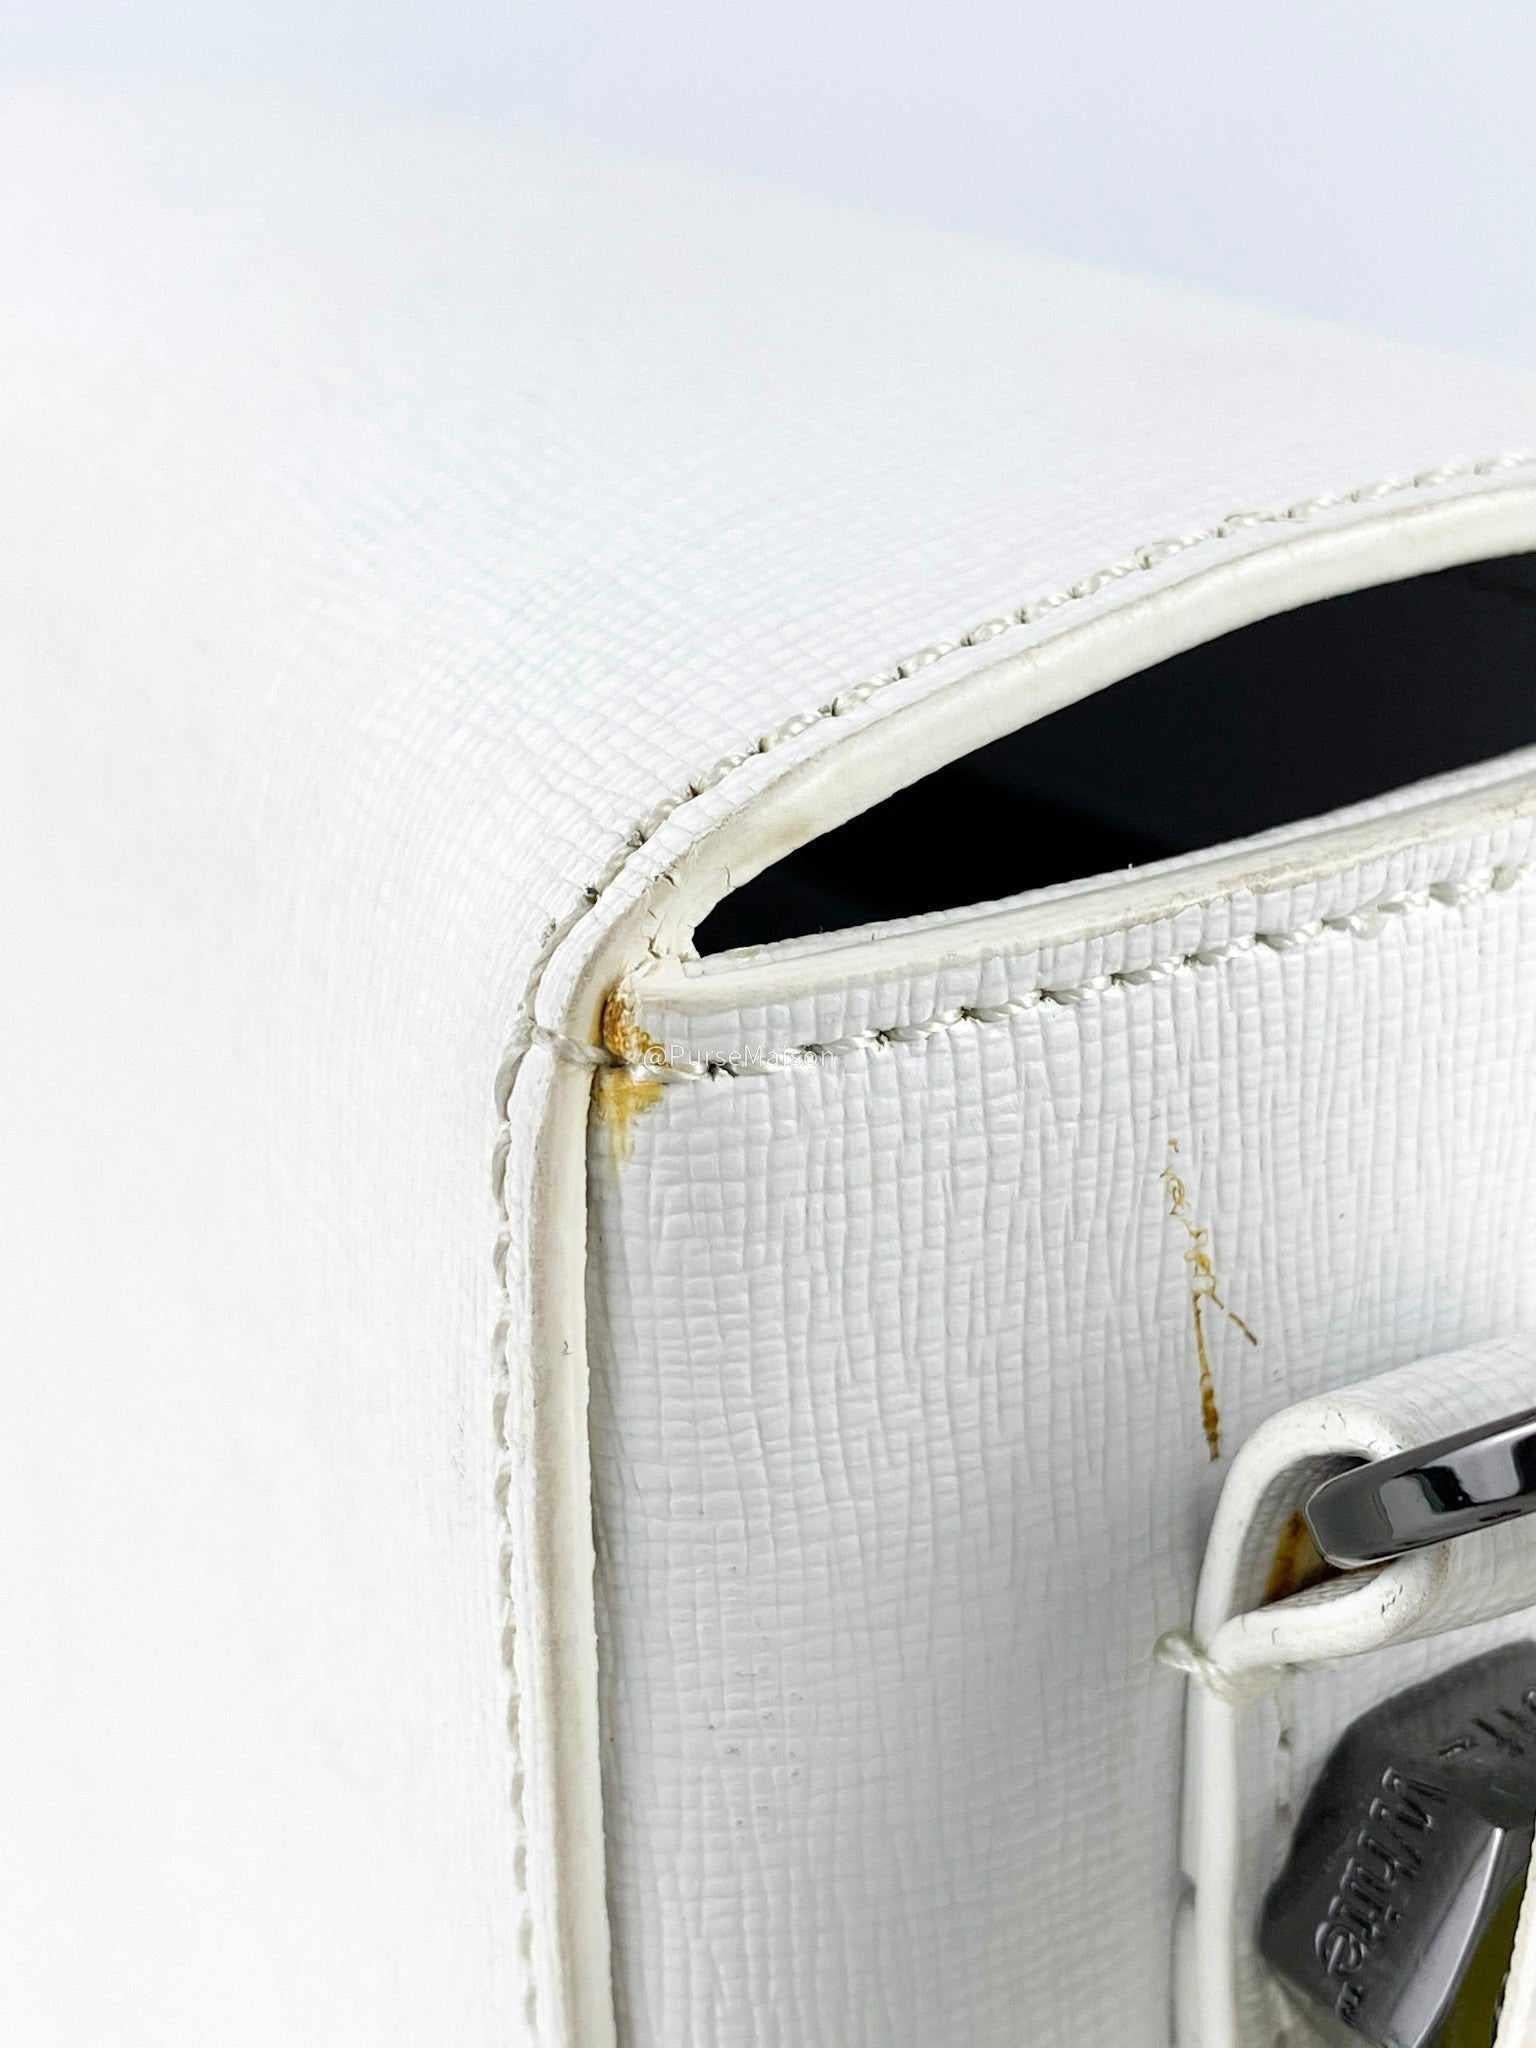 Off-White Diagonal Binder Clip Bag